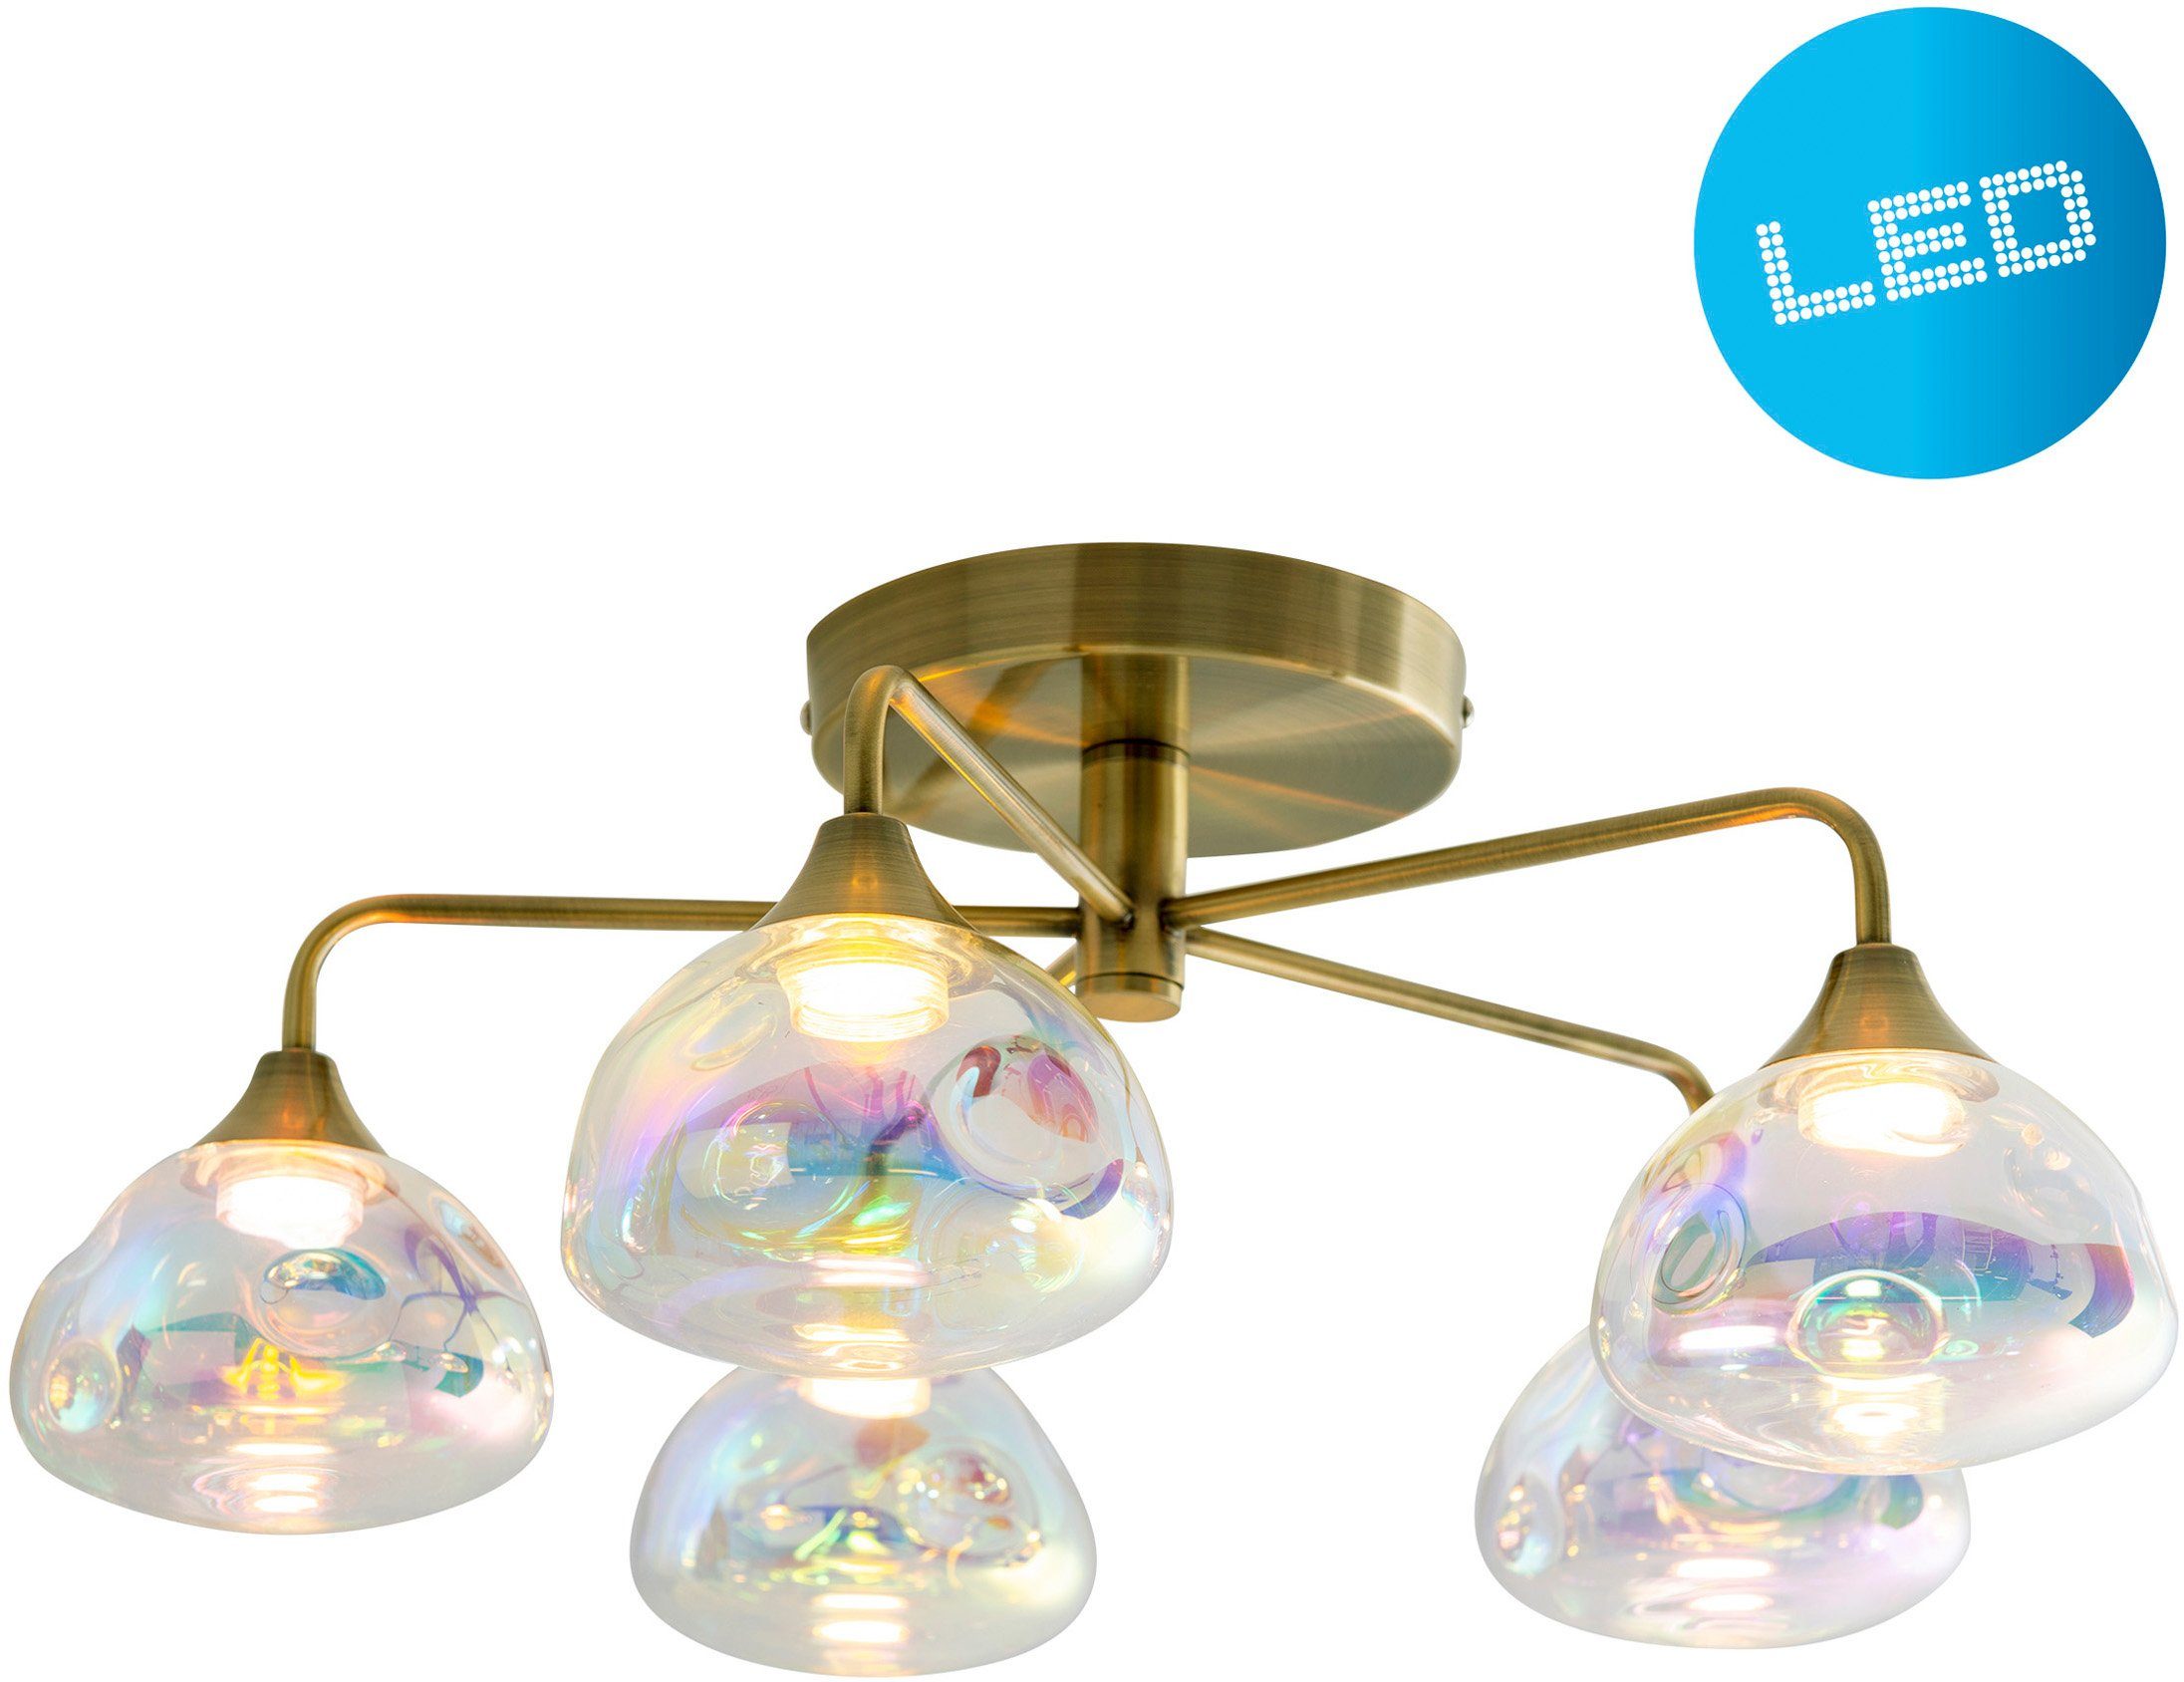 Gestell LED LEDs irisierendes Glas incl. fest Varna, LED flg. messing 5 Warmweiß, integriert, Deckenleuchte näve warmweiß